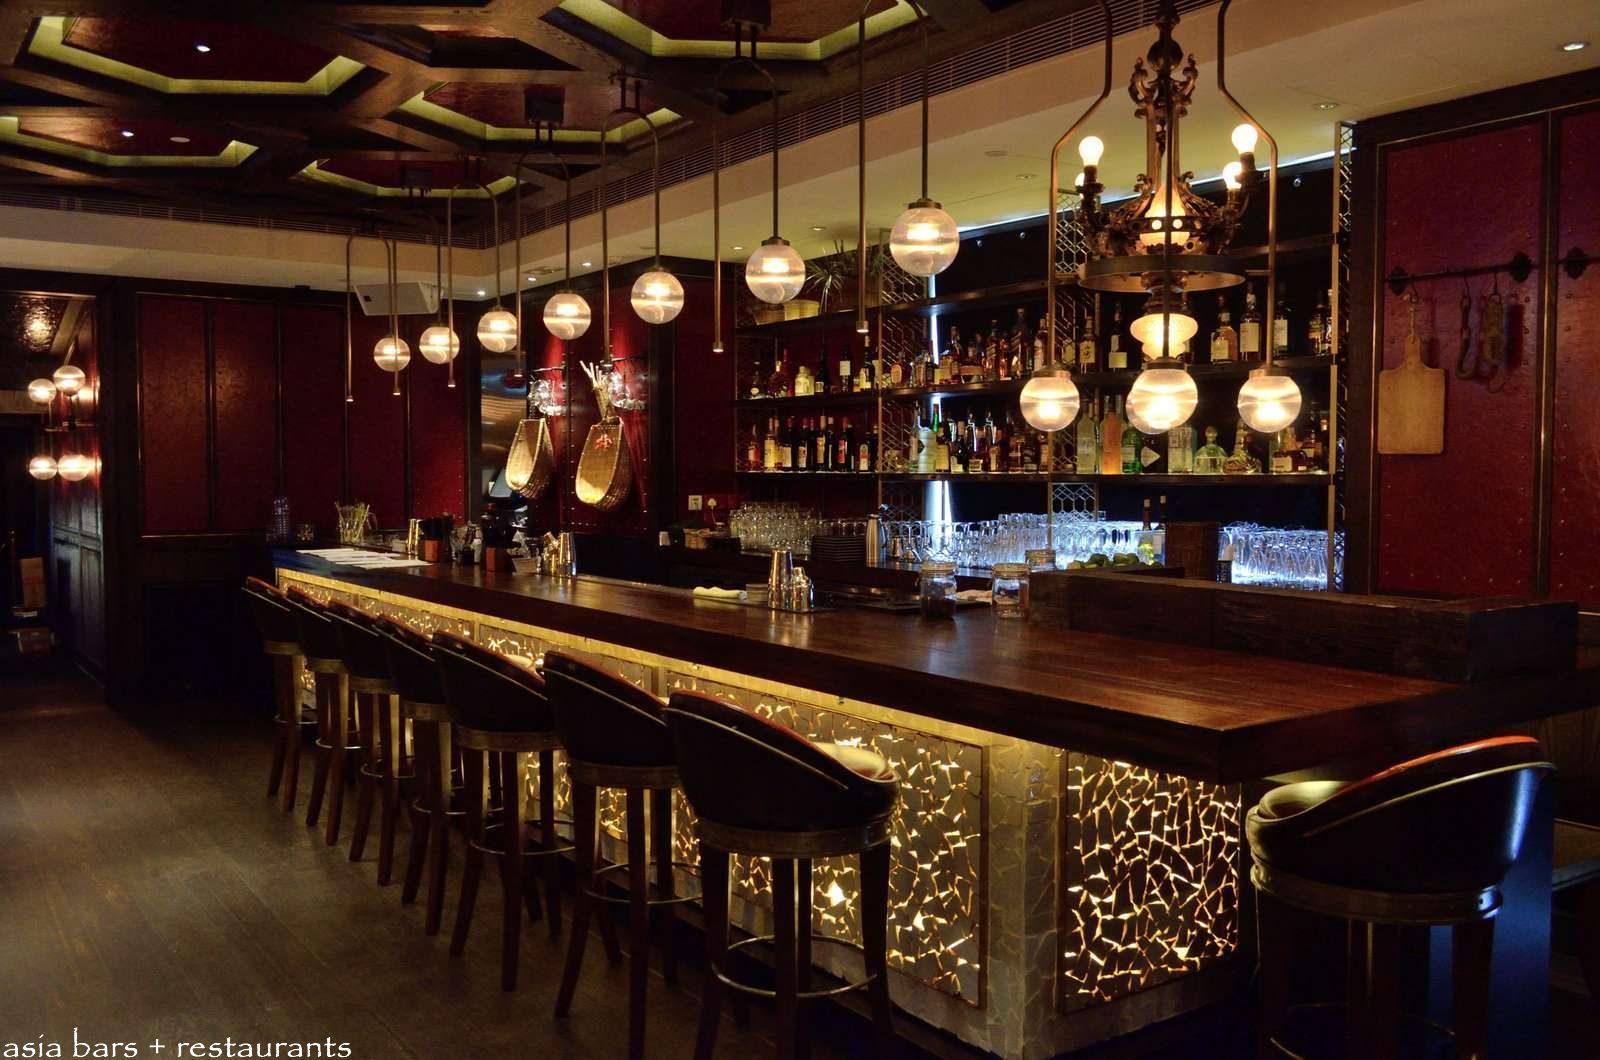 amazing bar interior restaurant, Restaurant bar, Home bar counter